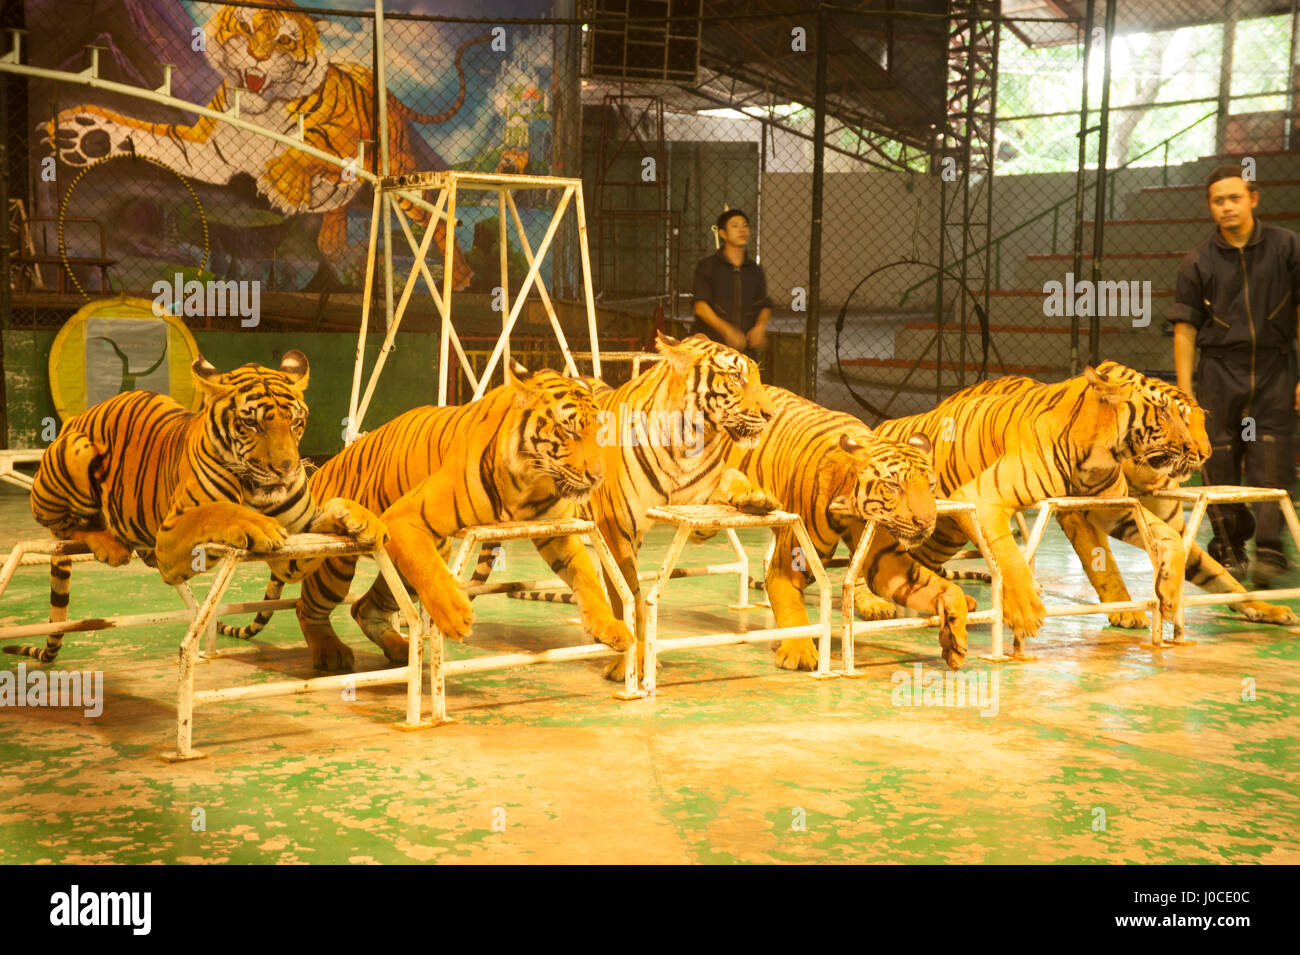 Tiger visualizza, sriracha tiger zoo, bangkok, Thailandia, asia Foto Stock